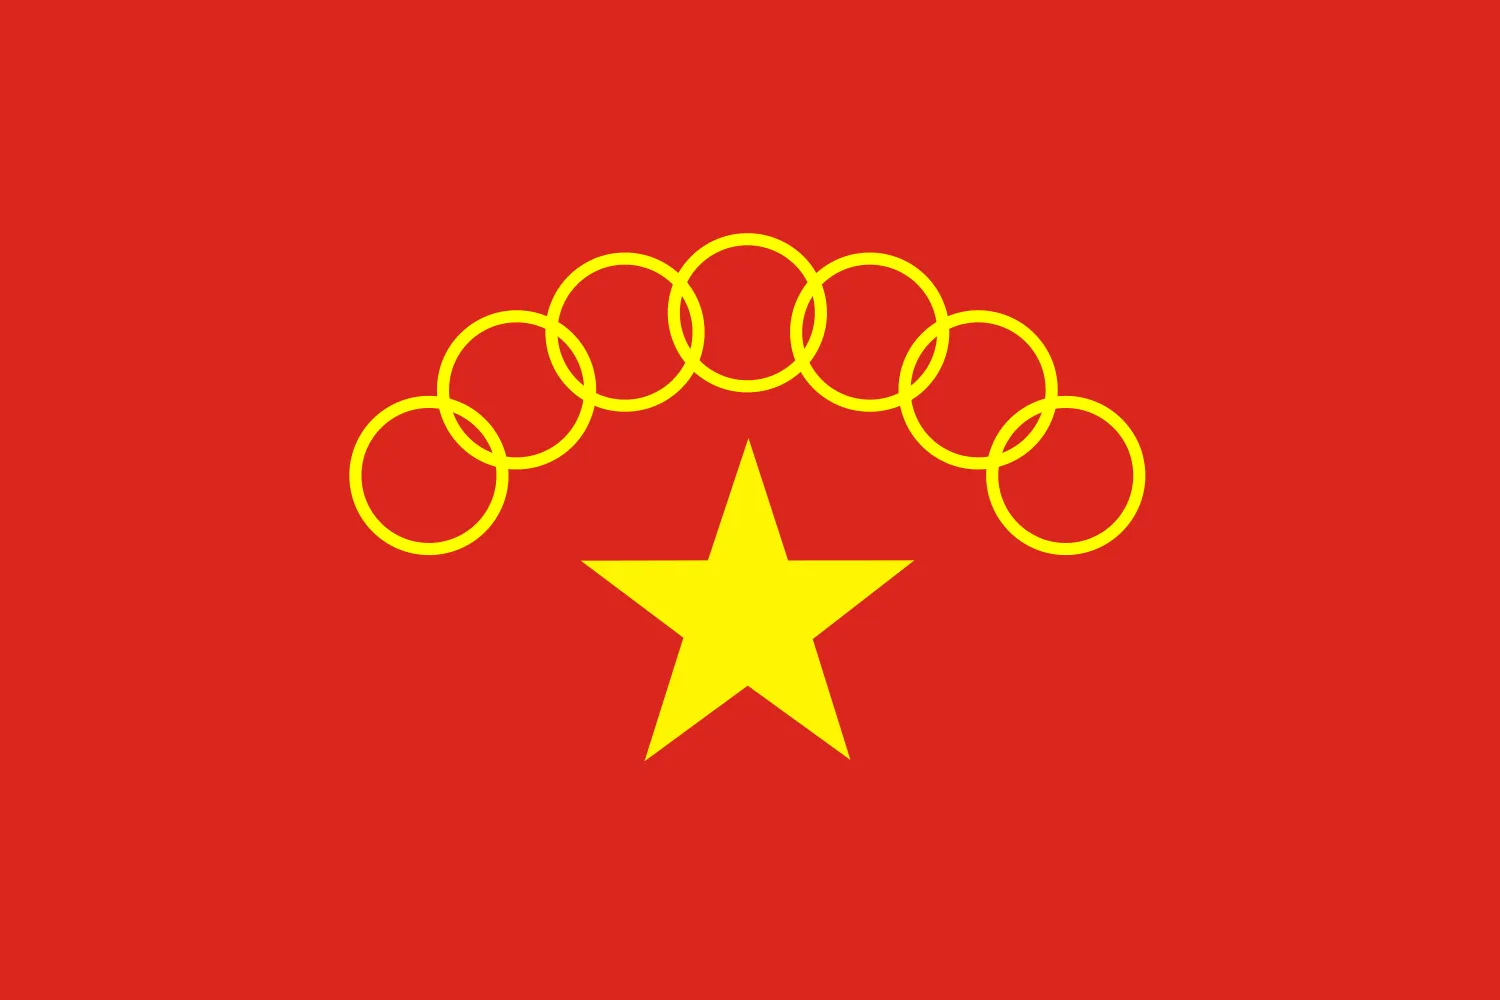 Flag of the Myanmar National Democratic Alliance Army (MNDAA) - image